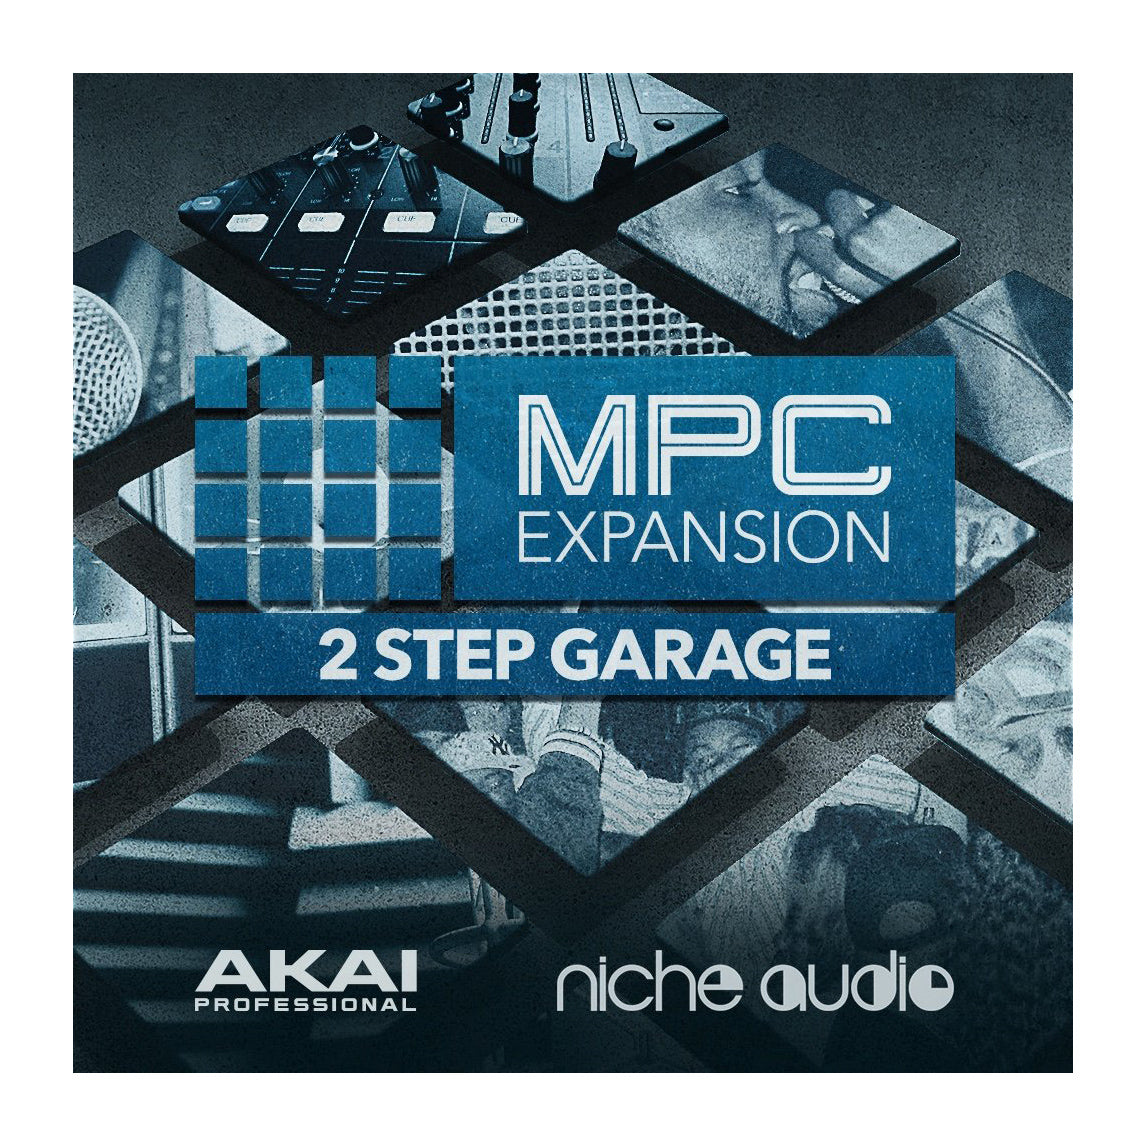 Akai Professional 2 Step Garage